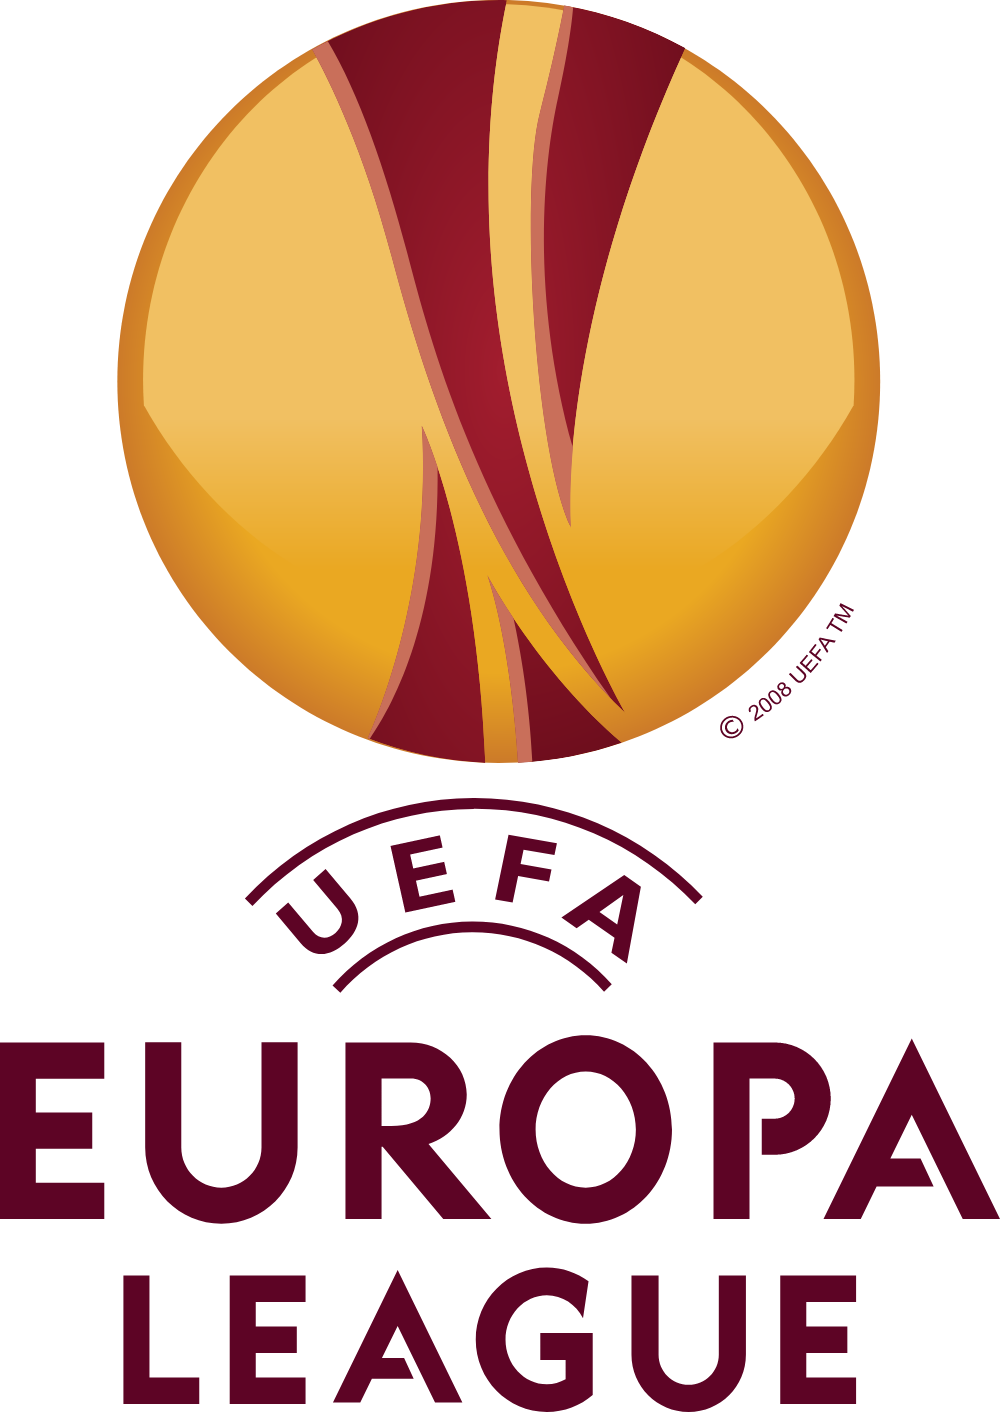 UEFA Europa League Logo Logos